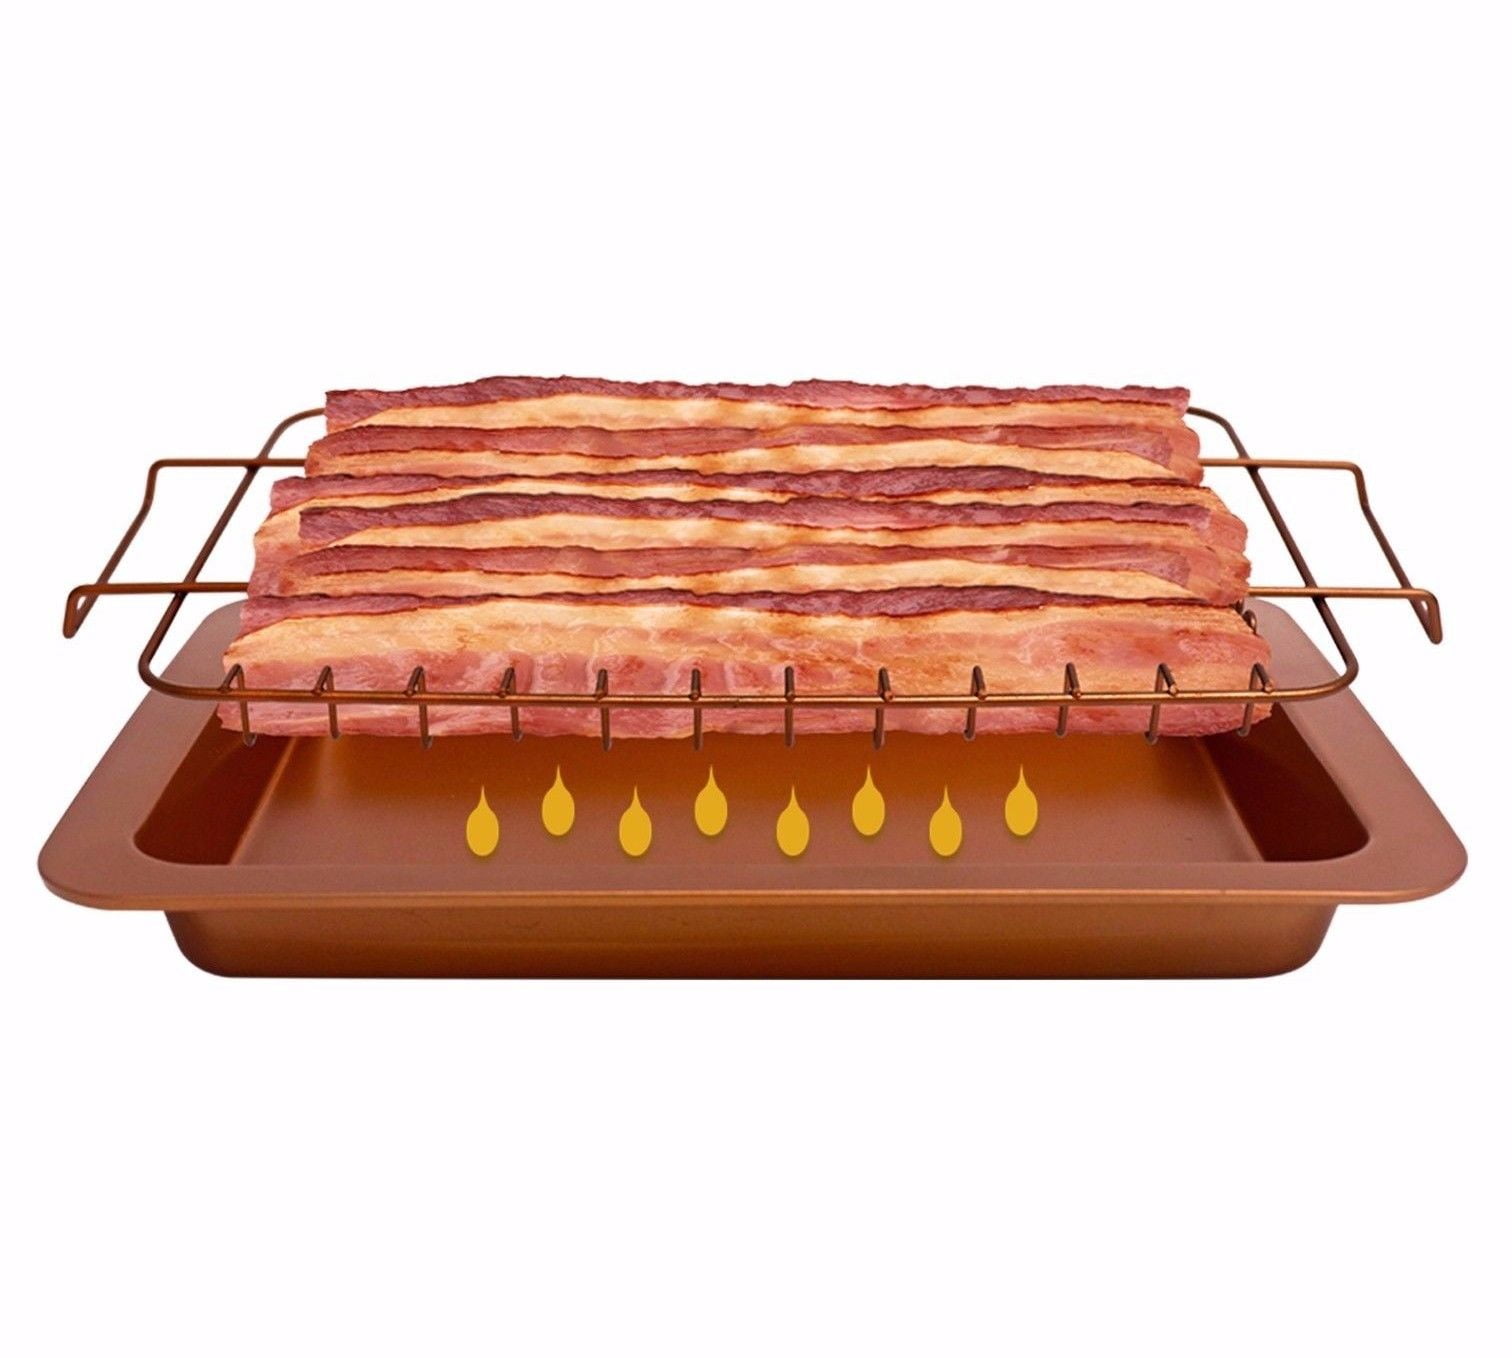  Gotham Steel Bacon Bonanza XL Baking Pan with Rack for Crispy  Bacon + Crisper Tray for Bacon with Grease Catcher, Nonstick Bacon Cooker  for Oven / Copper Bacon Pan, Non-Toxic Oven /